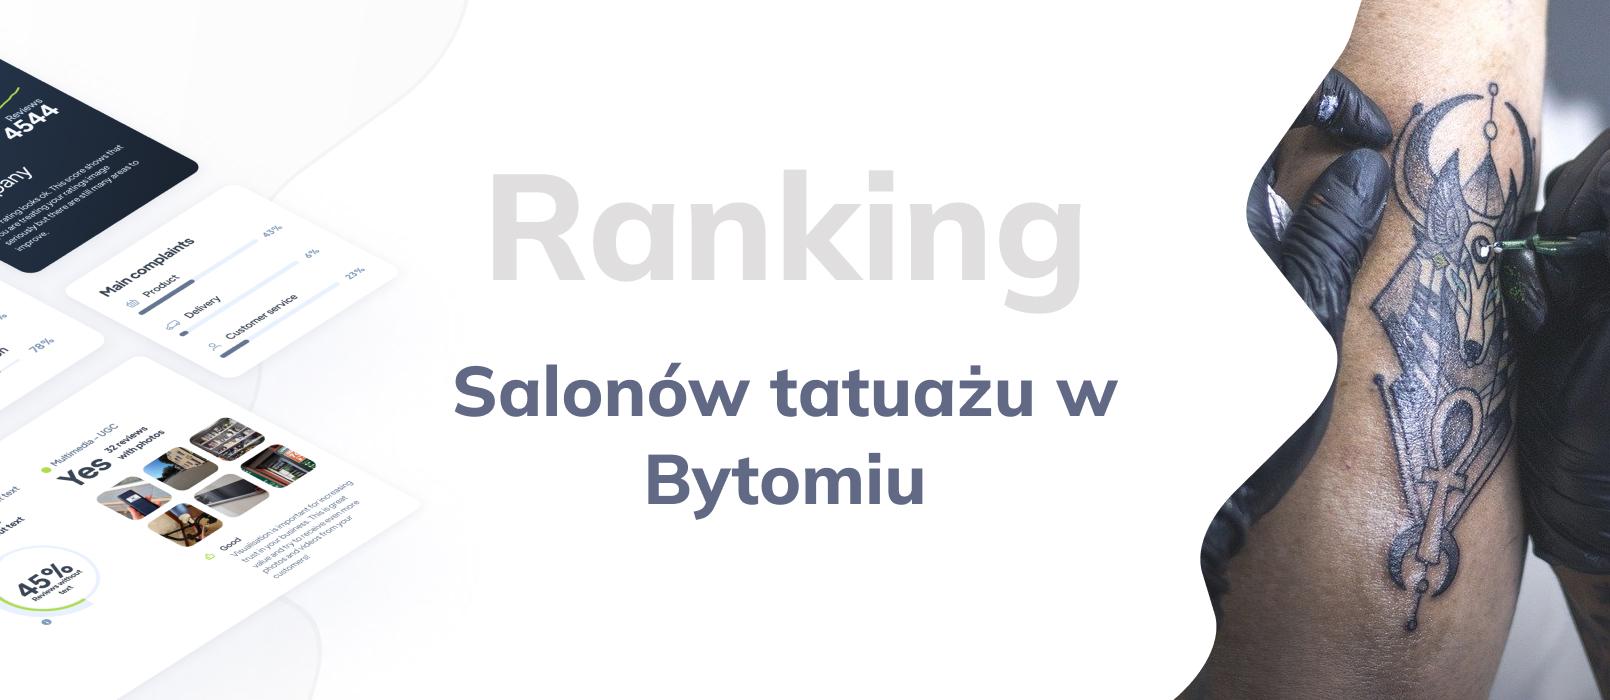 Salony tatuażu w Bytomiu - ranking TOP 10